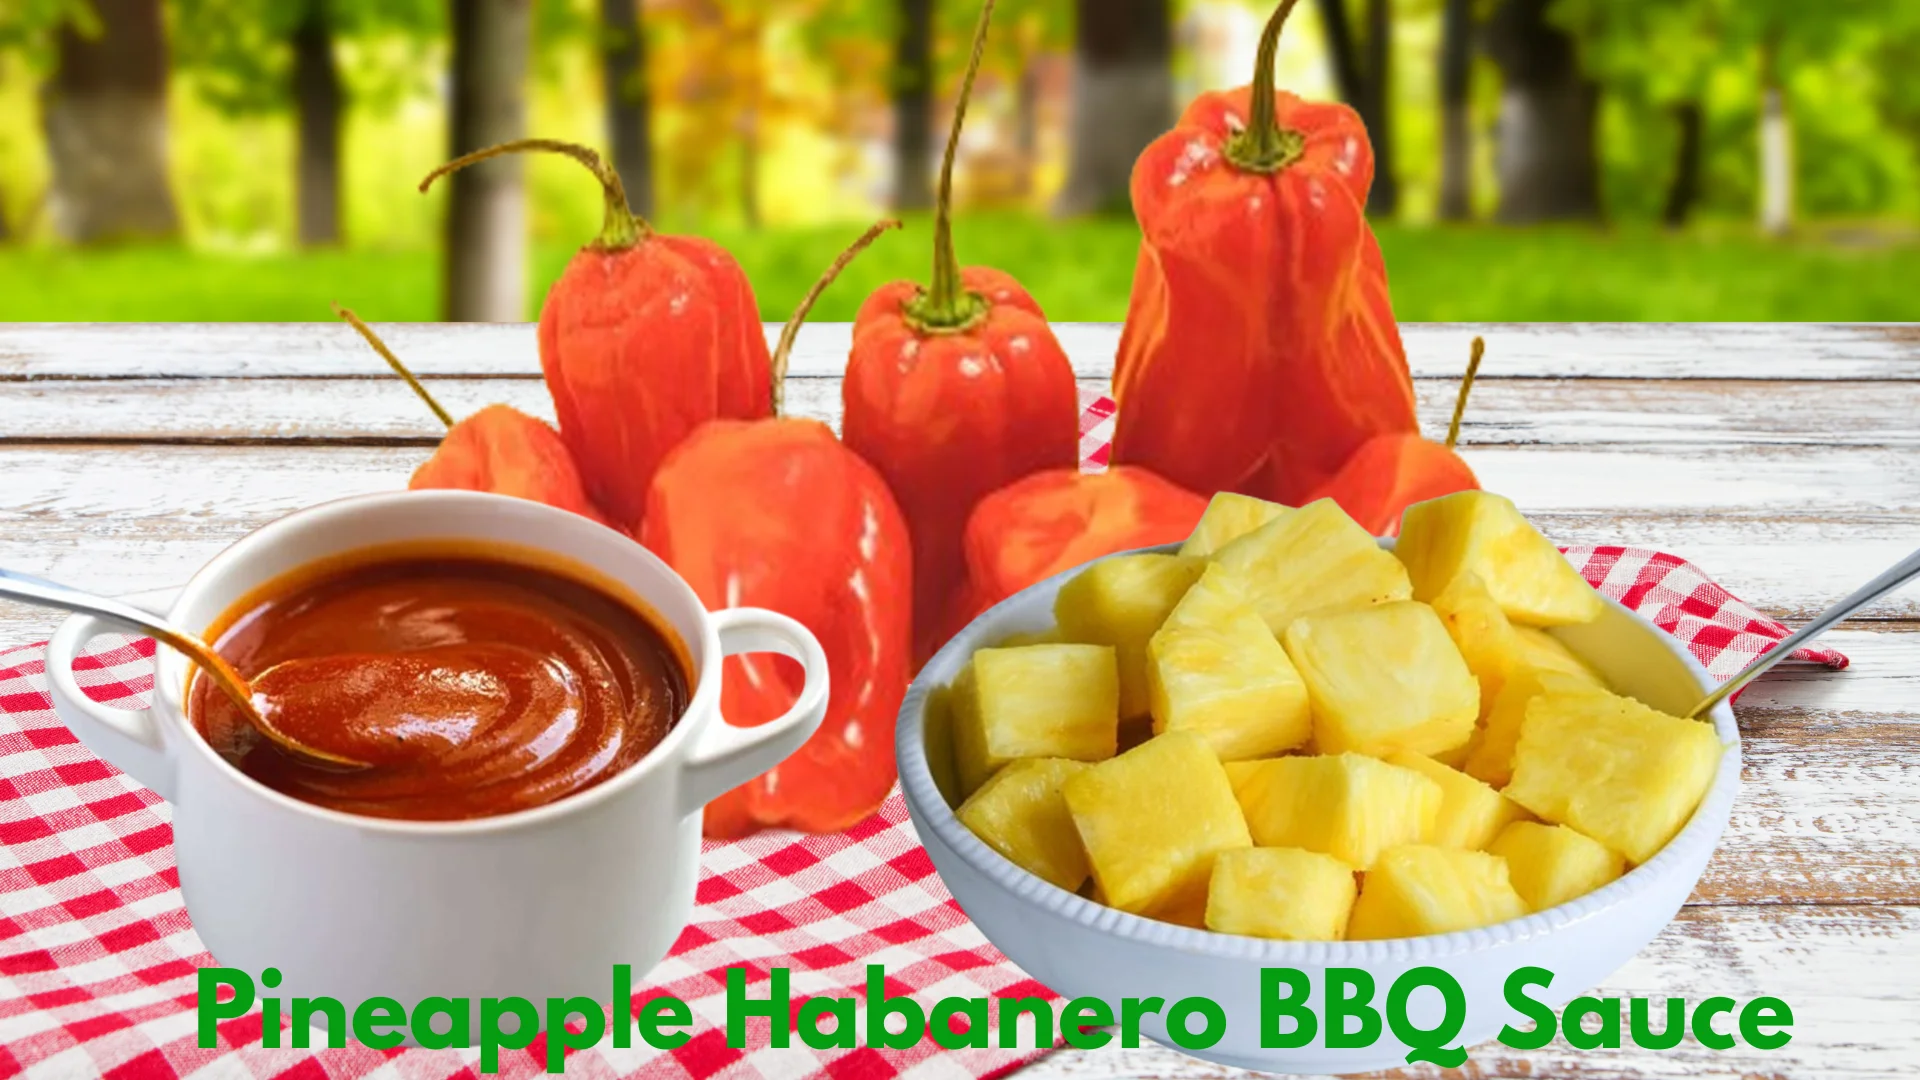 Pineapple Habanero BBQ Sauce